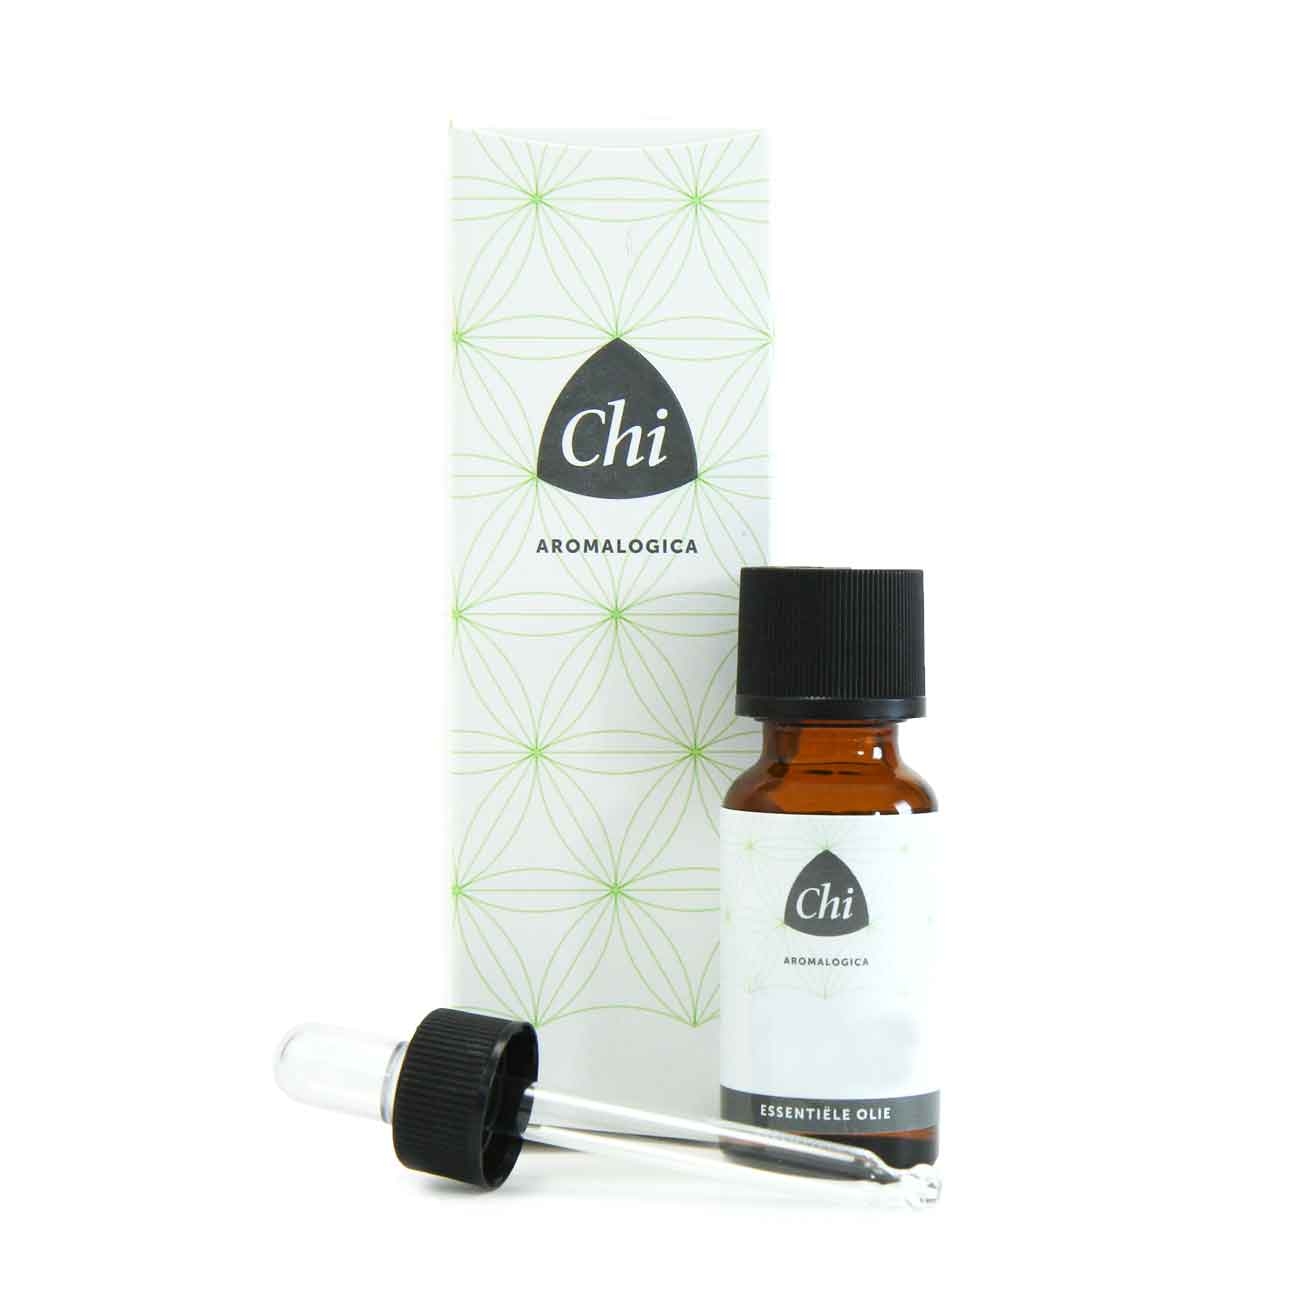 Chi Aroma Inhaler